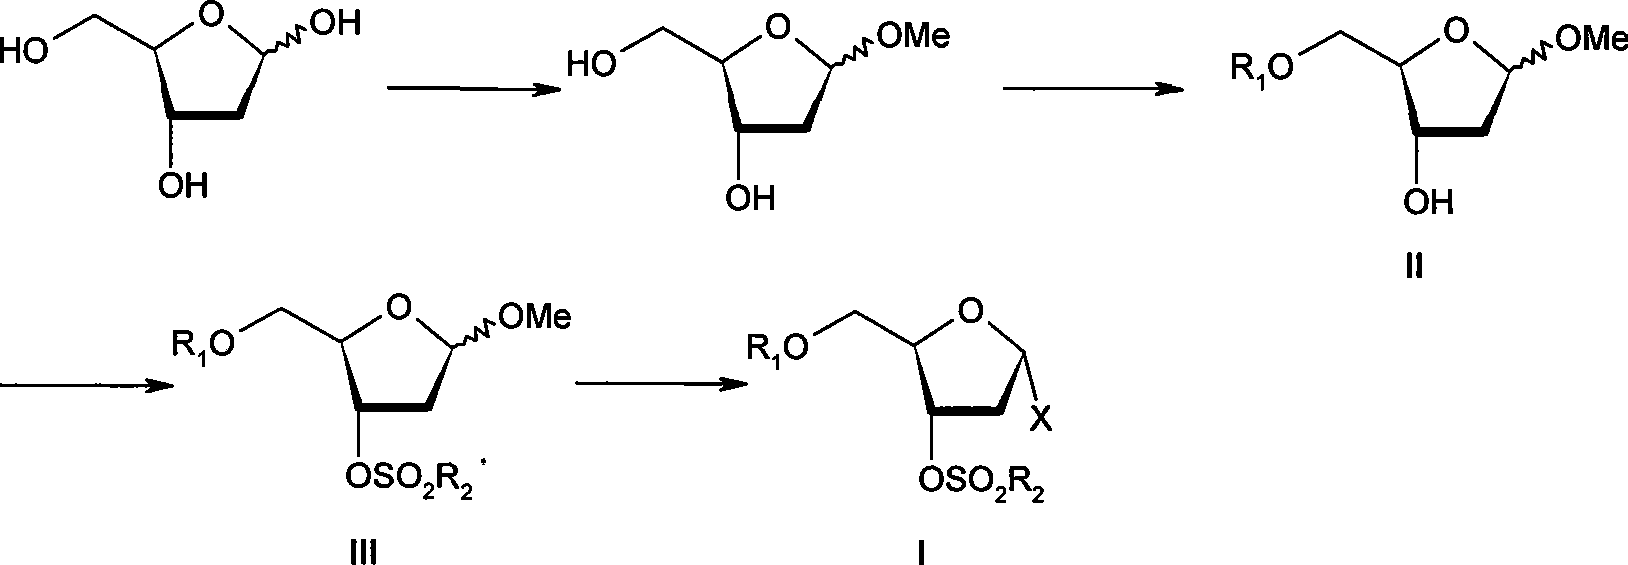 Intermediate for synthesizing azidothimidine, preparation thereof and use in azidothimidine synthesis